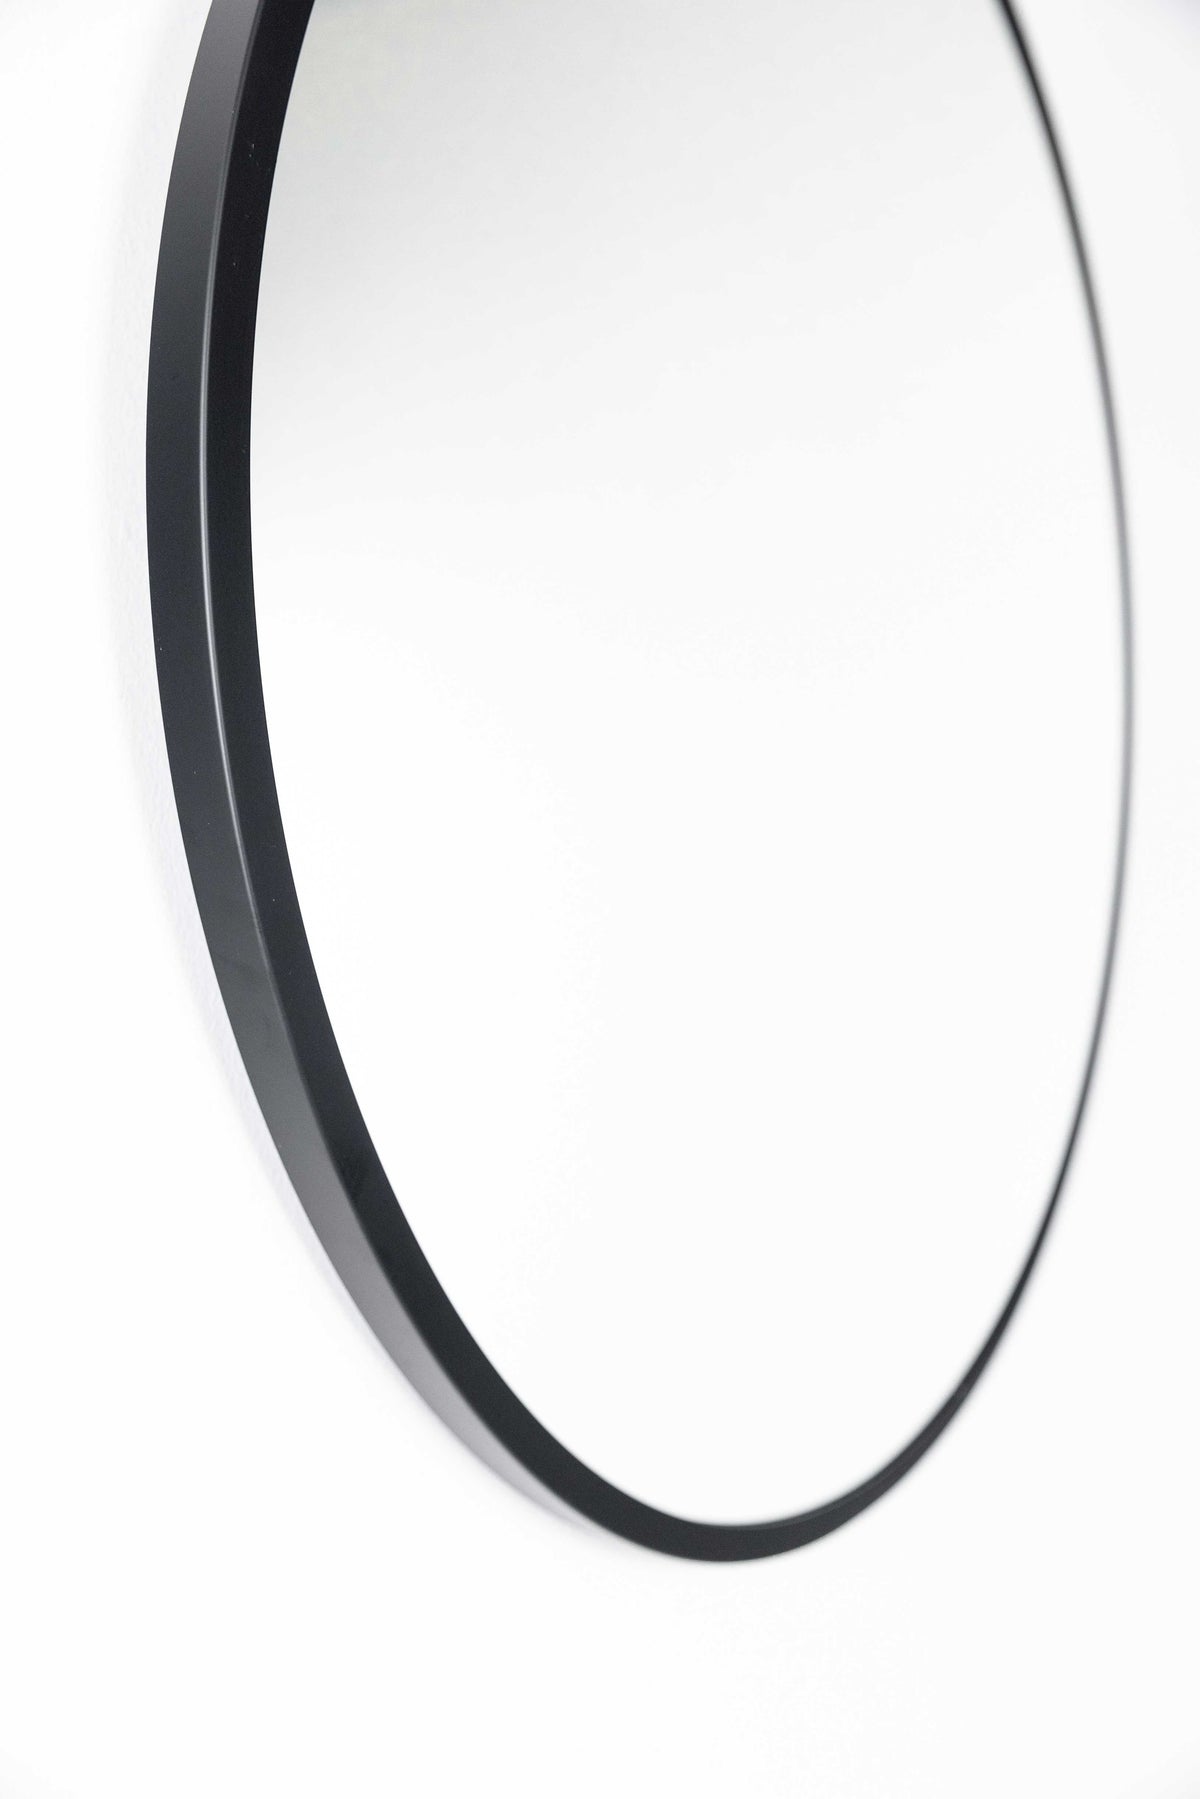 Madrid Black Round Metal Mirror 600mm or 800mm Diameter